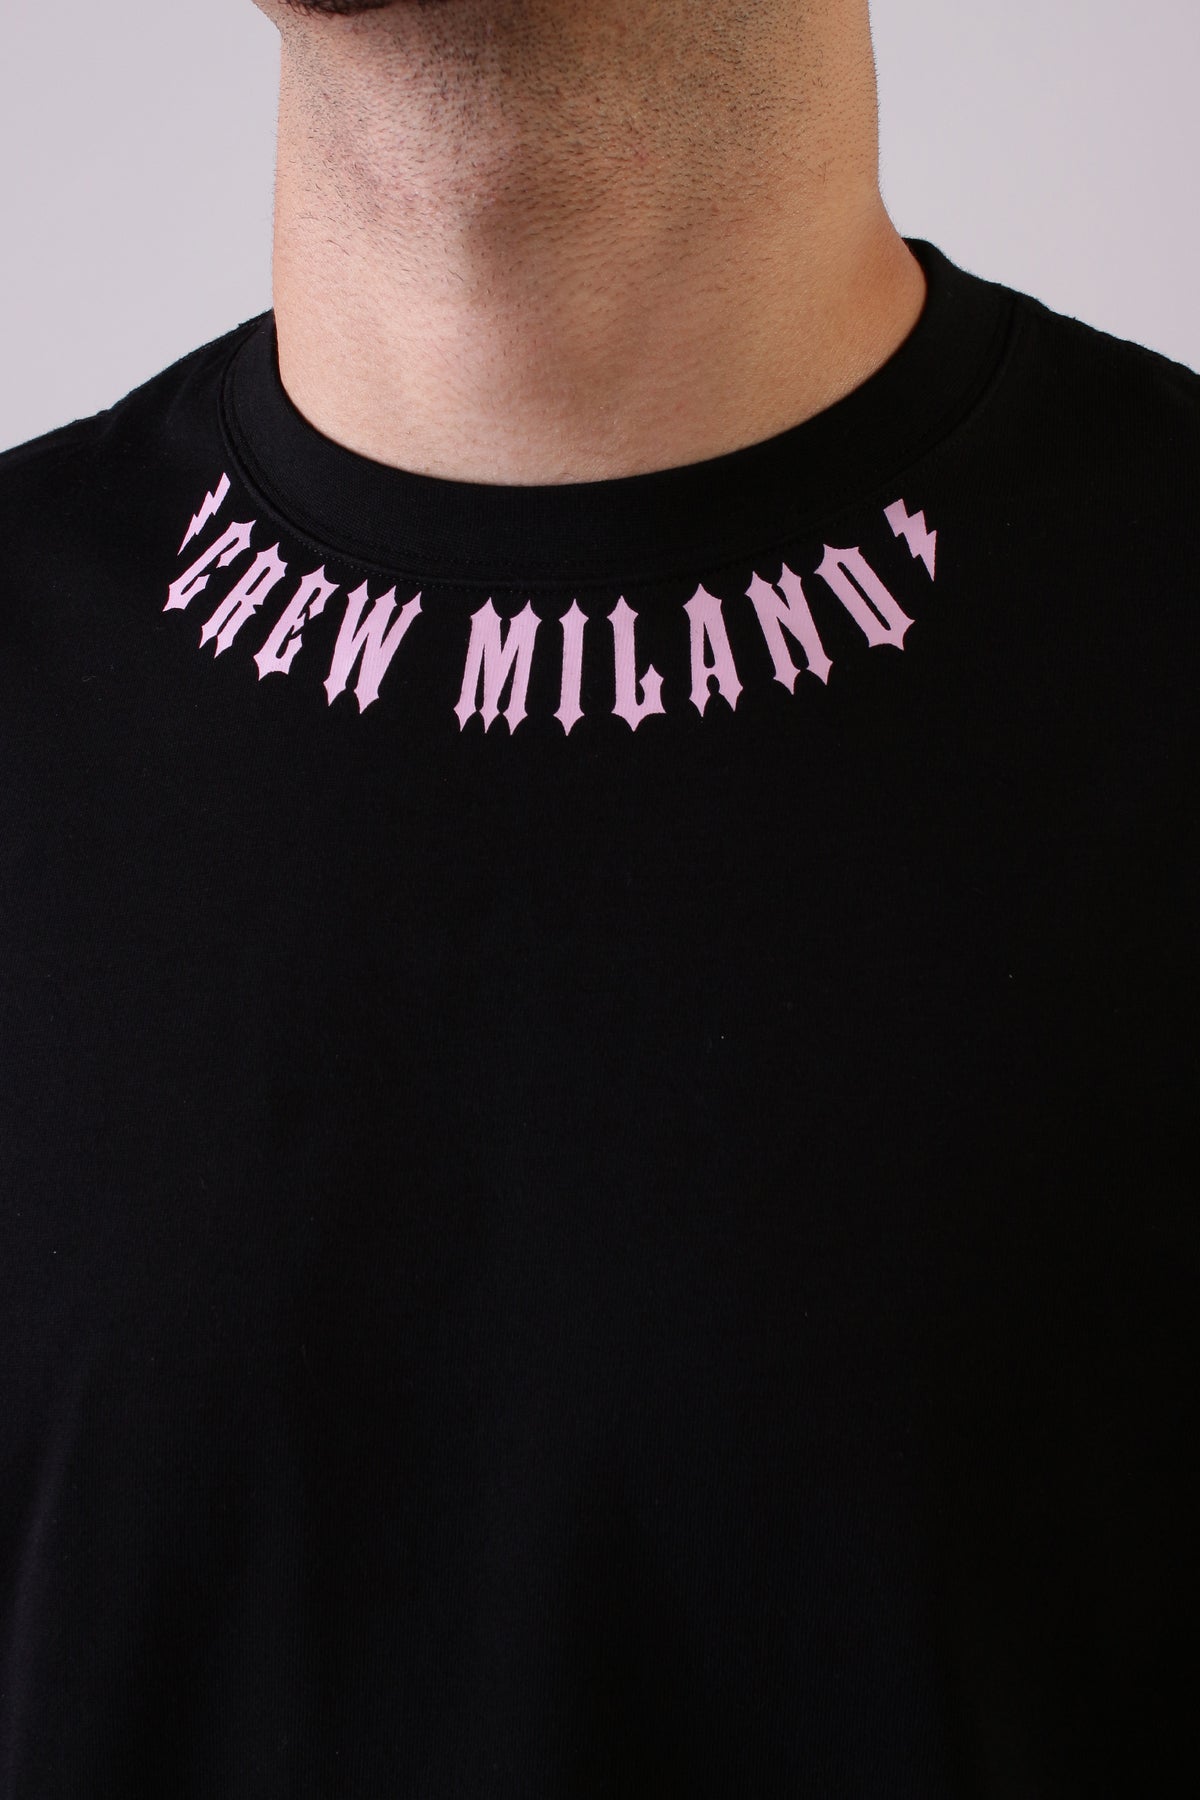 CREW Milano DUBAI Black/Pink T-Shirt